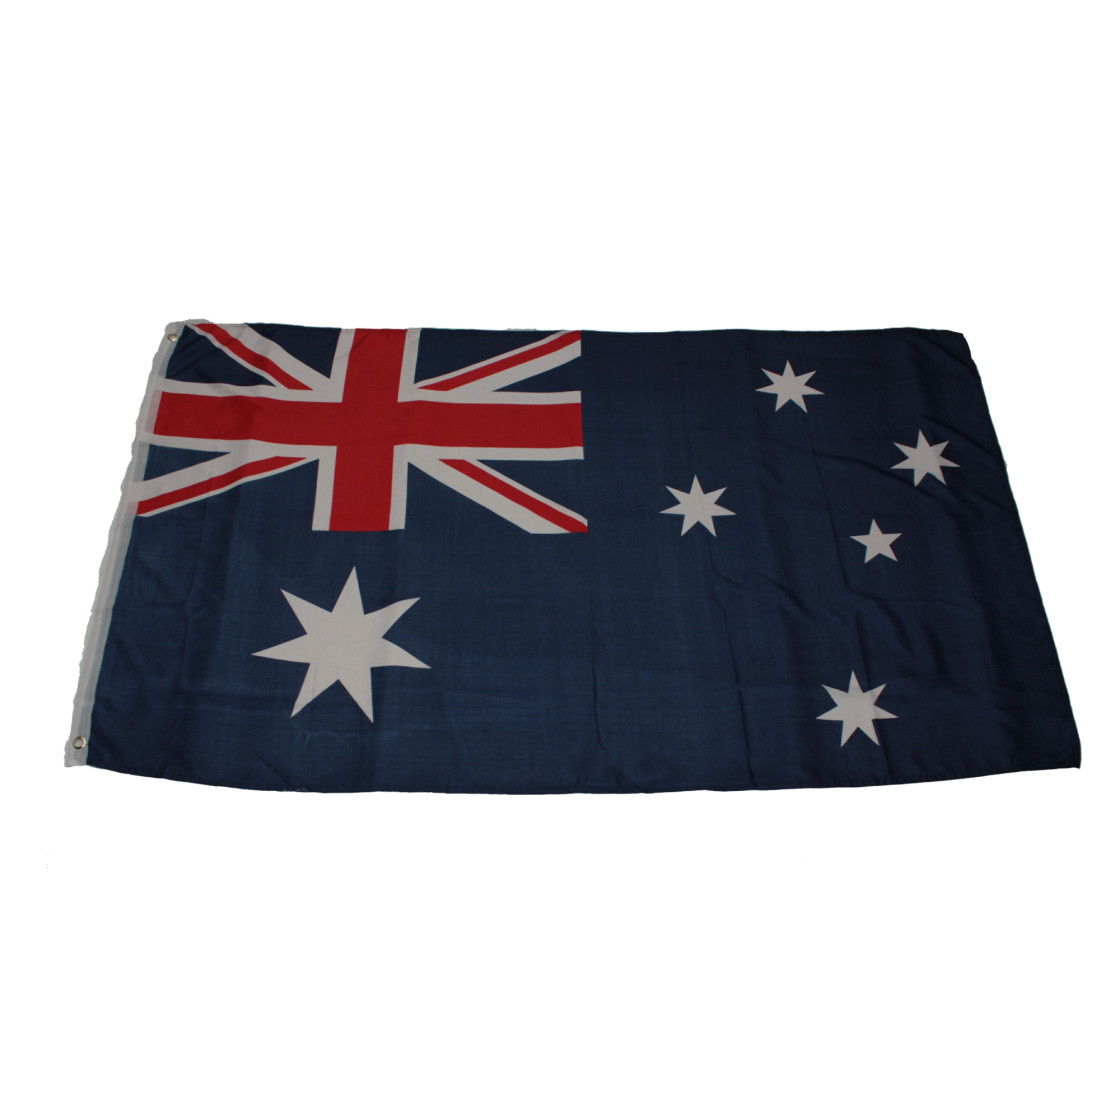 Australien Flagge 90 x 150